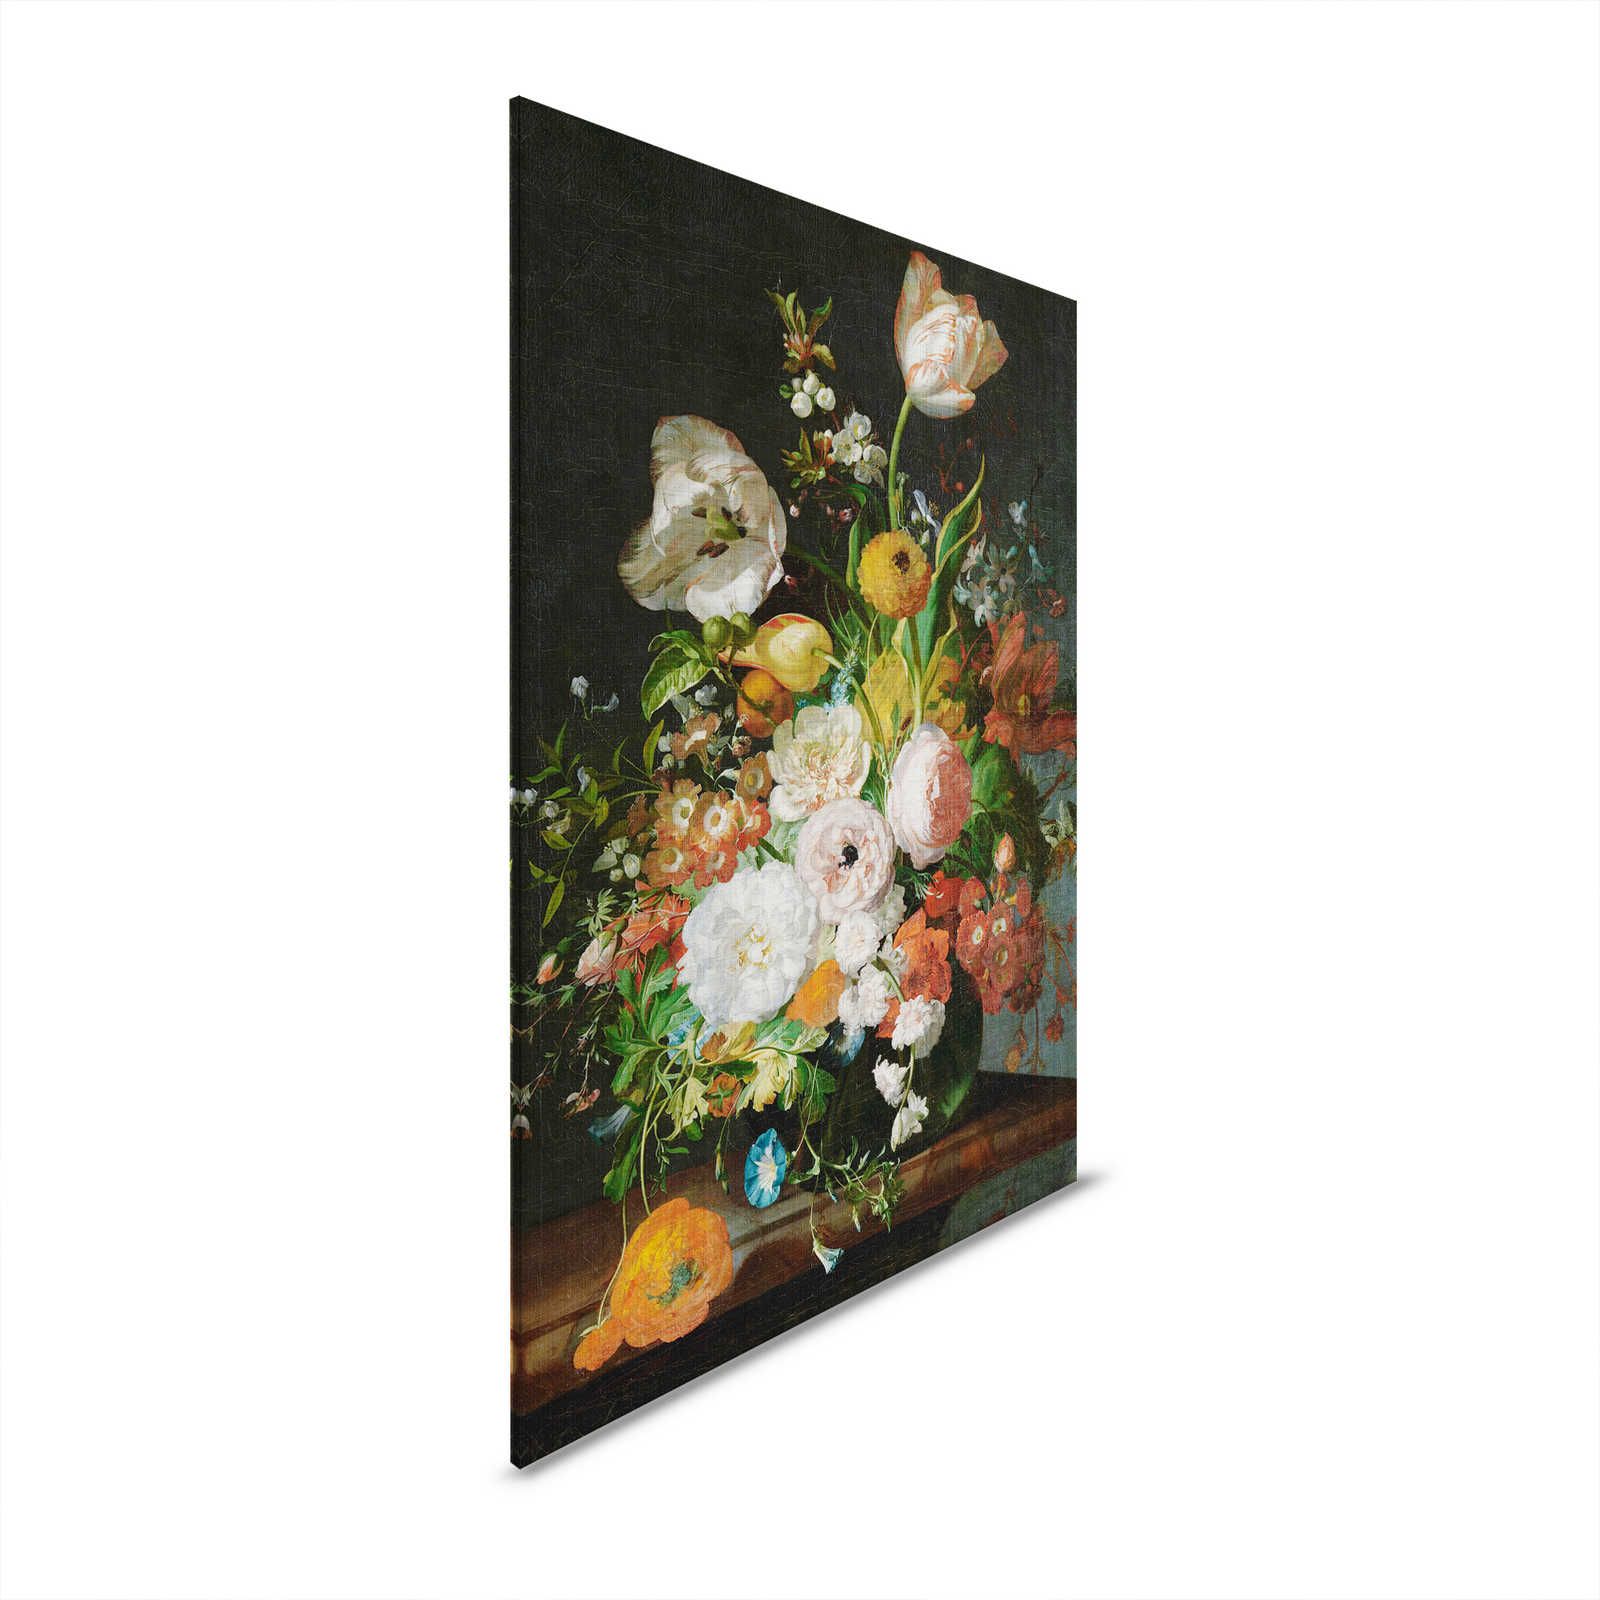         Artists Studio 2 - Leinwandbild Blumen Strauß Gemälde Kunststil – 0,60 m x 0,90 m
    